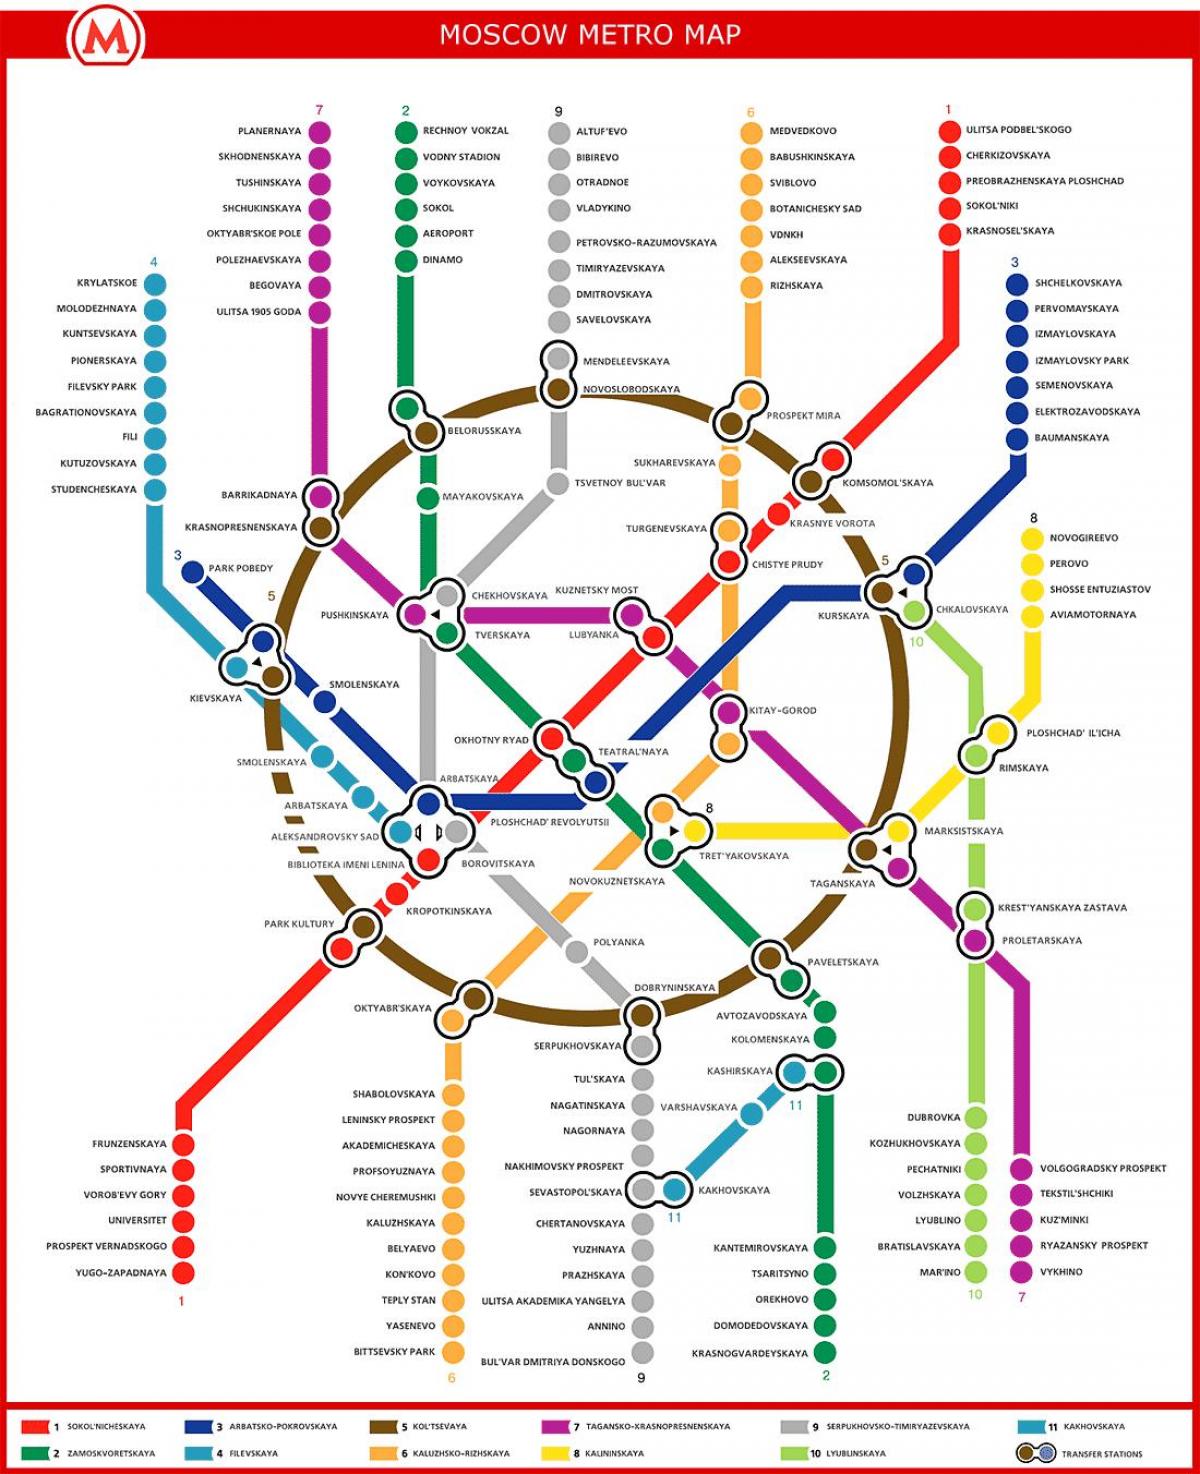 Moscow metro zemljevid v ruski